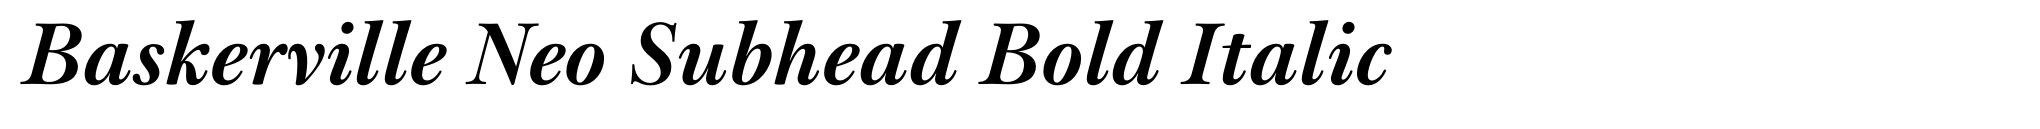 Baskerville Neo Subhead Bold Italic image